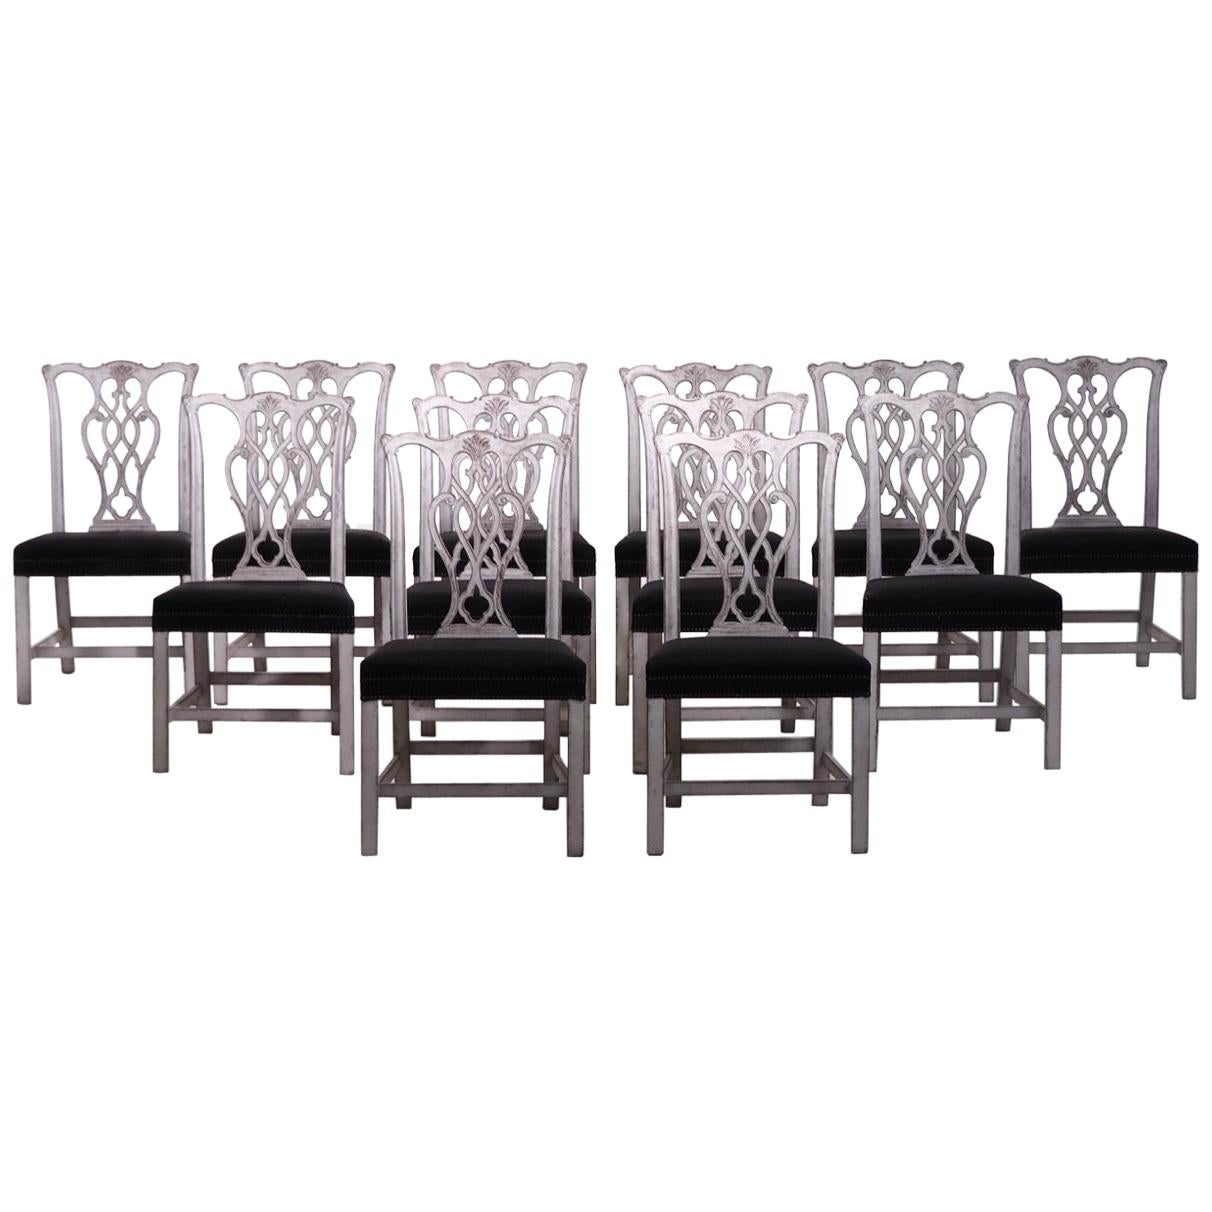 Set of 12 European Chairs, 19th Century